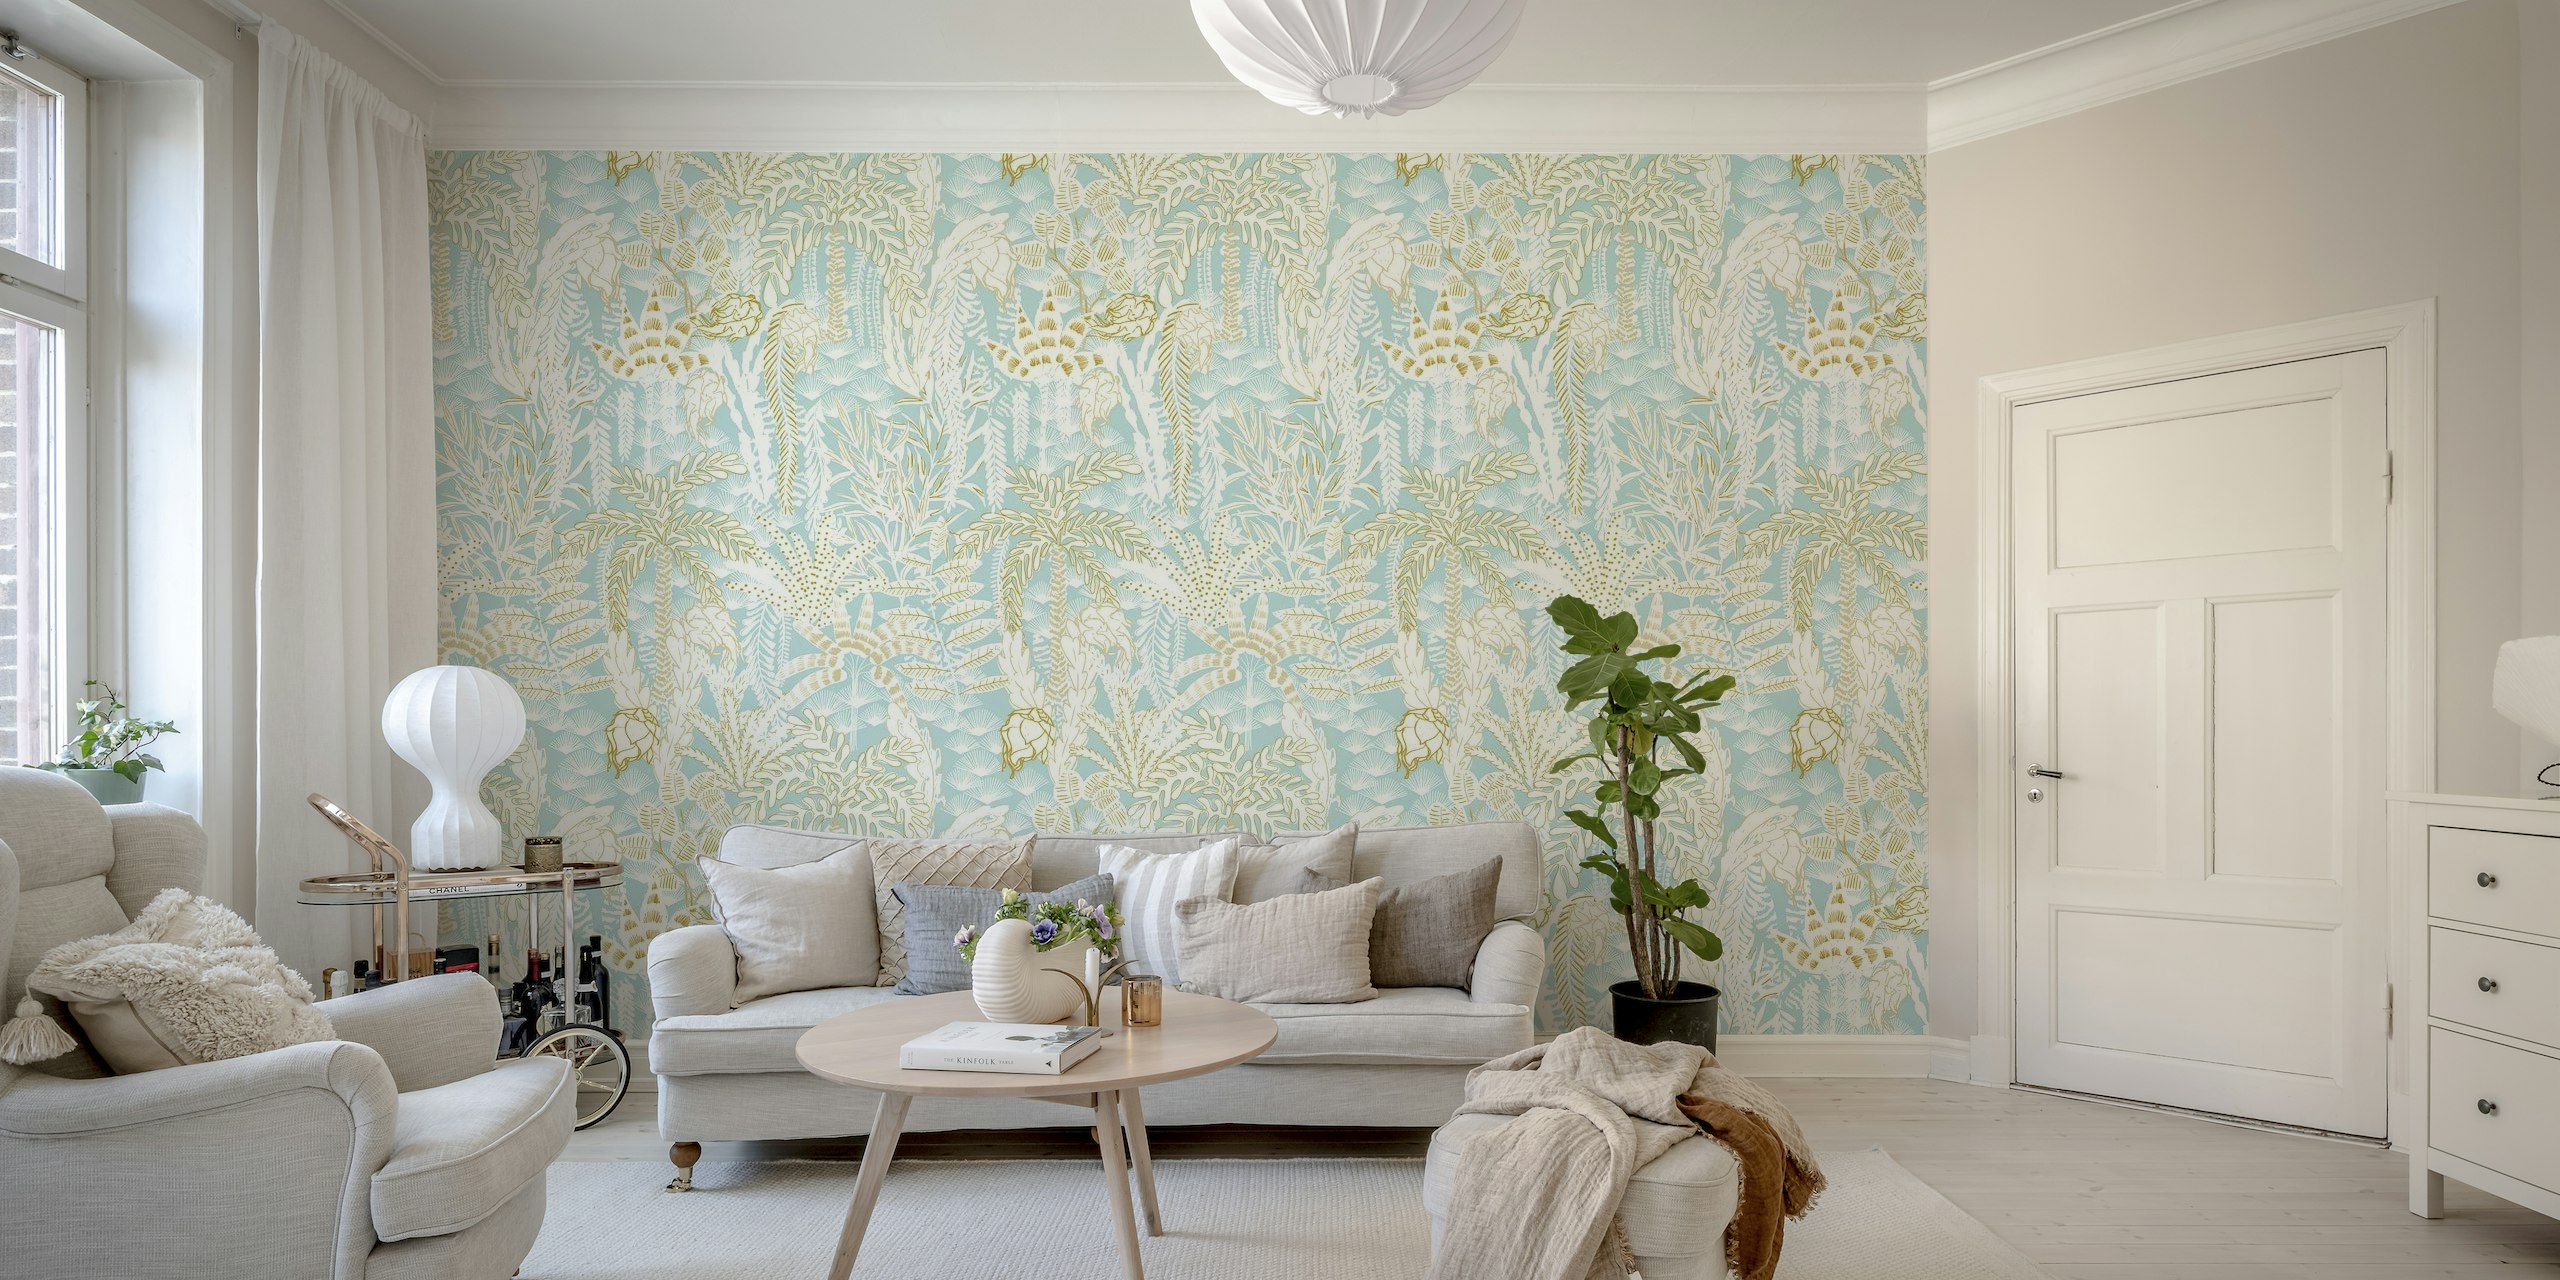 Tropical lounge warm white and aqua wallpaper